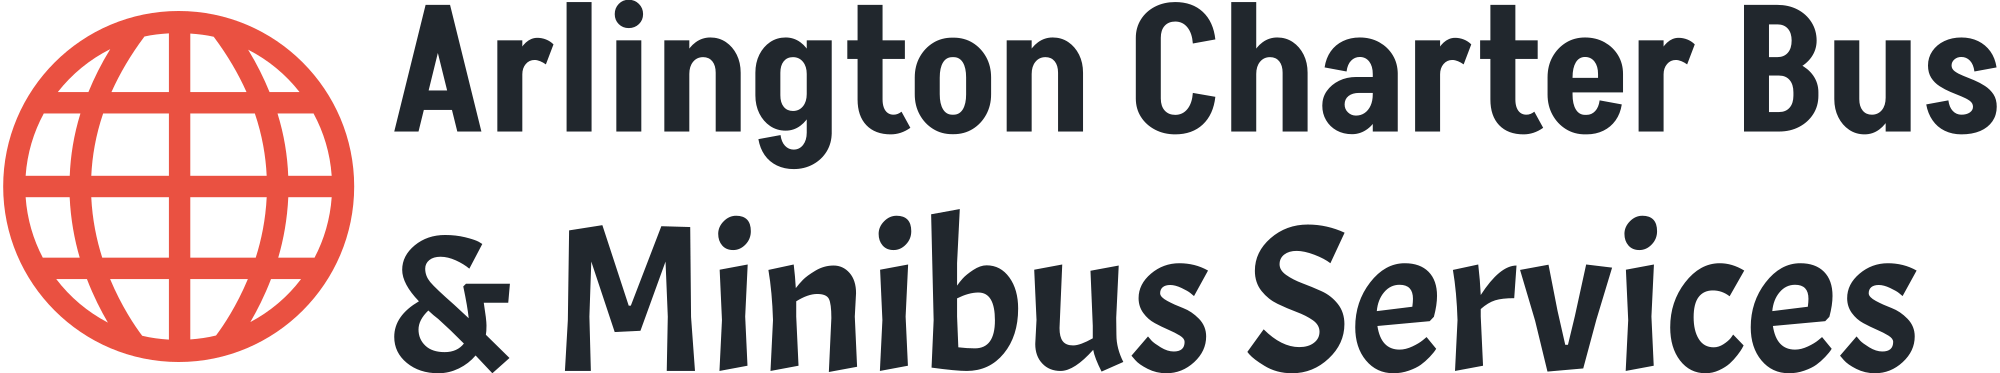 Charter Bus Company Arlington logo